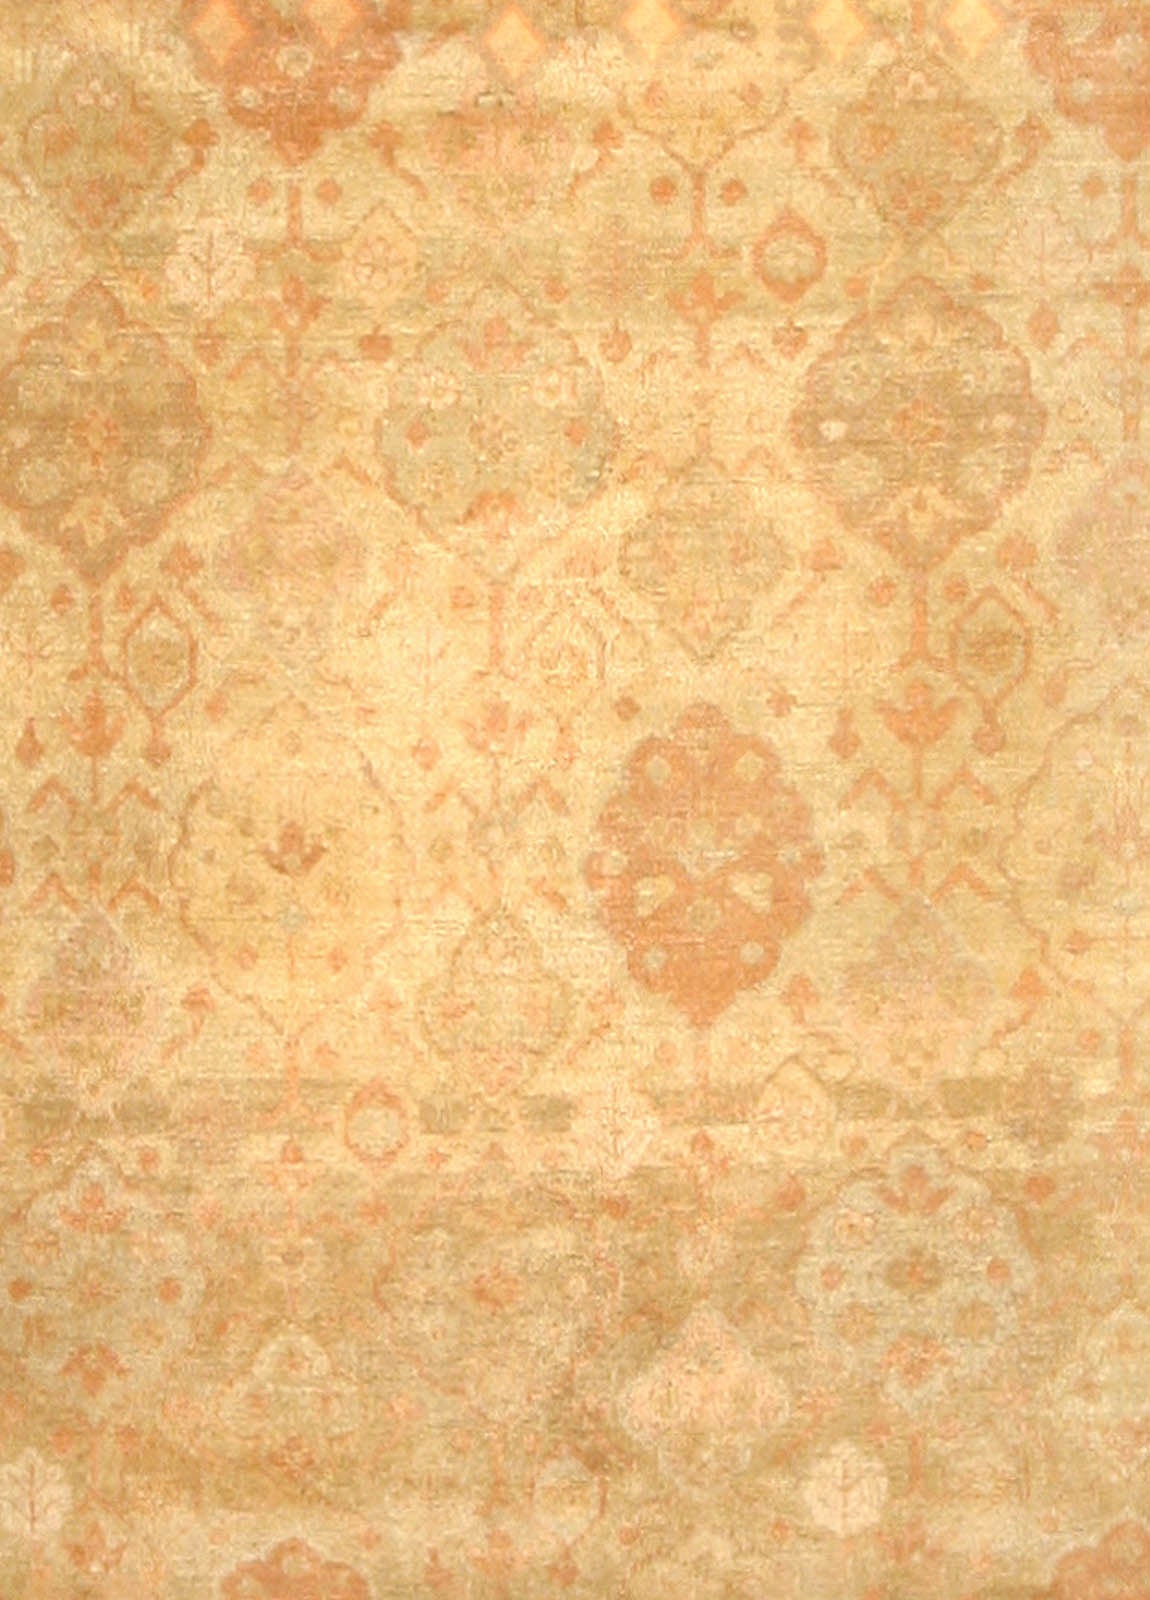 Antique Indian Amritsar handmade wool rug
Size: 11'11